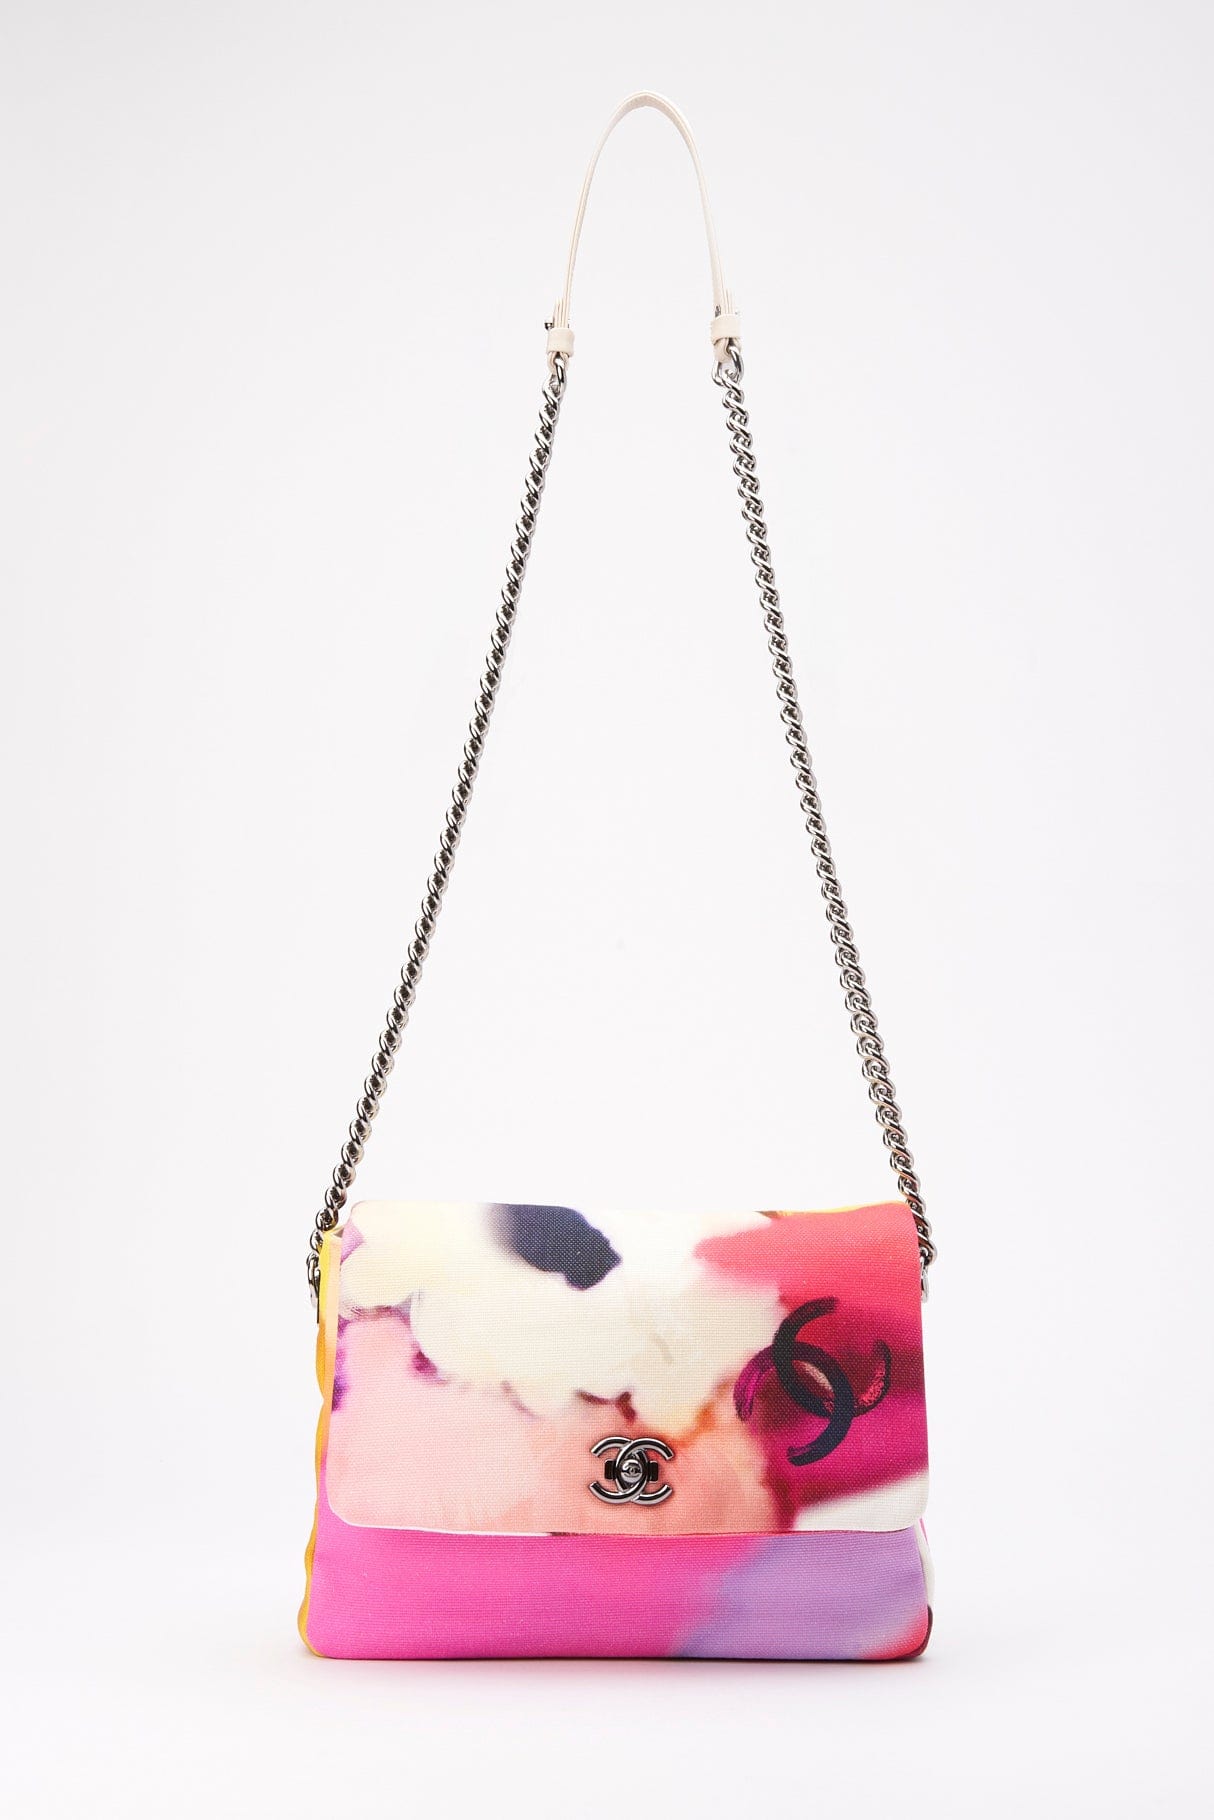 2015 Chanel Floral Watercolour Flap Bag - Never Worn